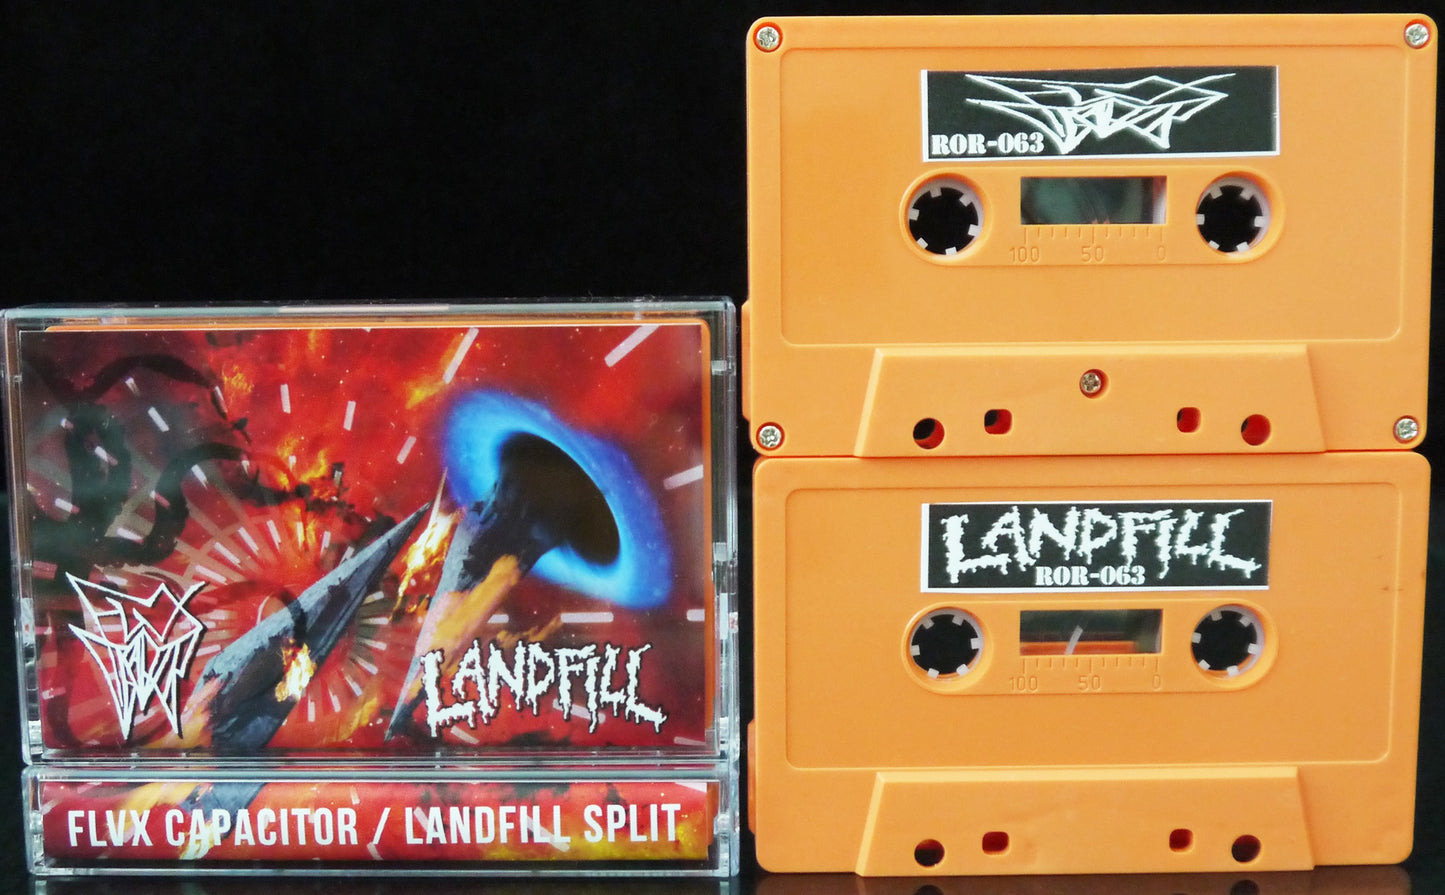 LANDFILL / FLVX CAPACITOR - Split Tape